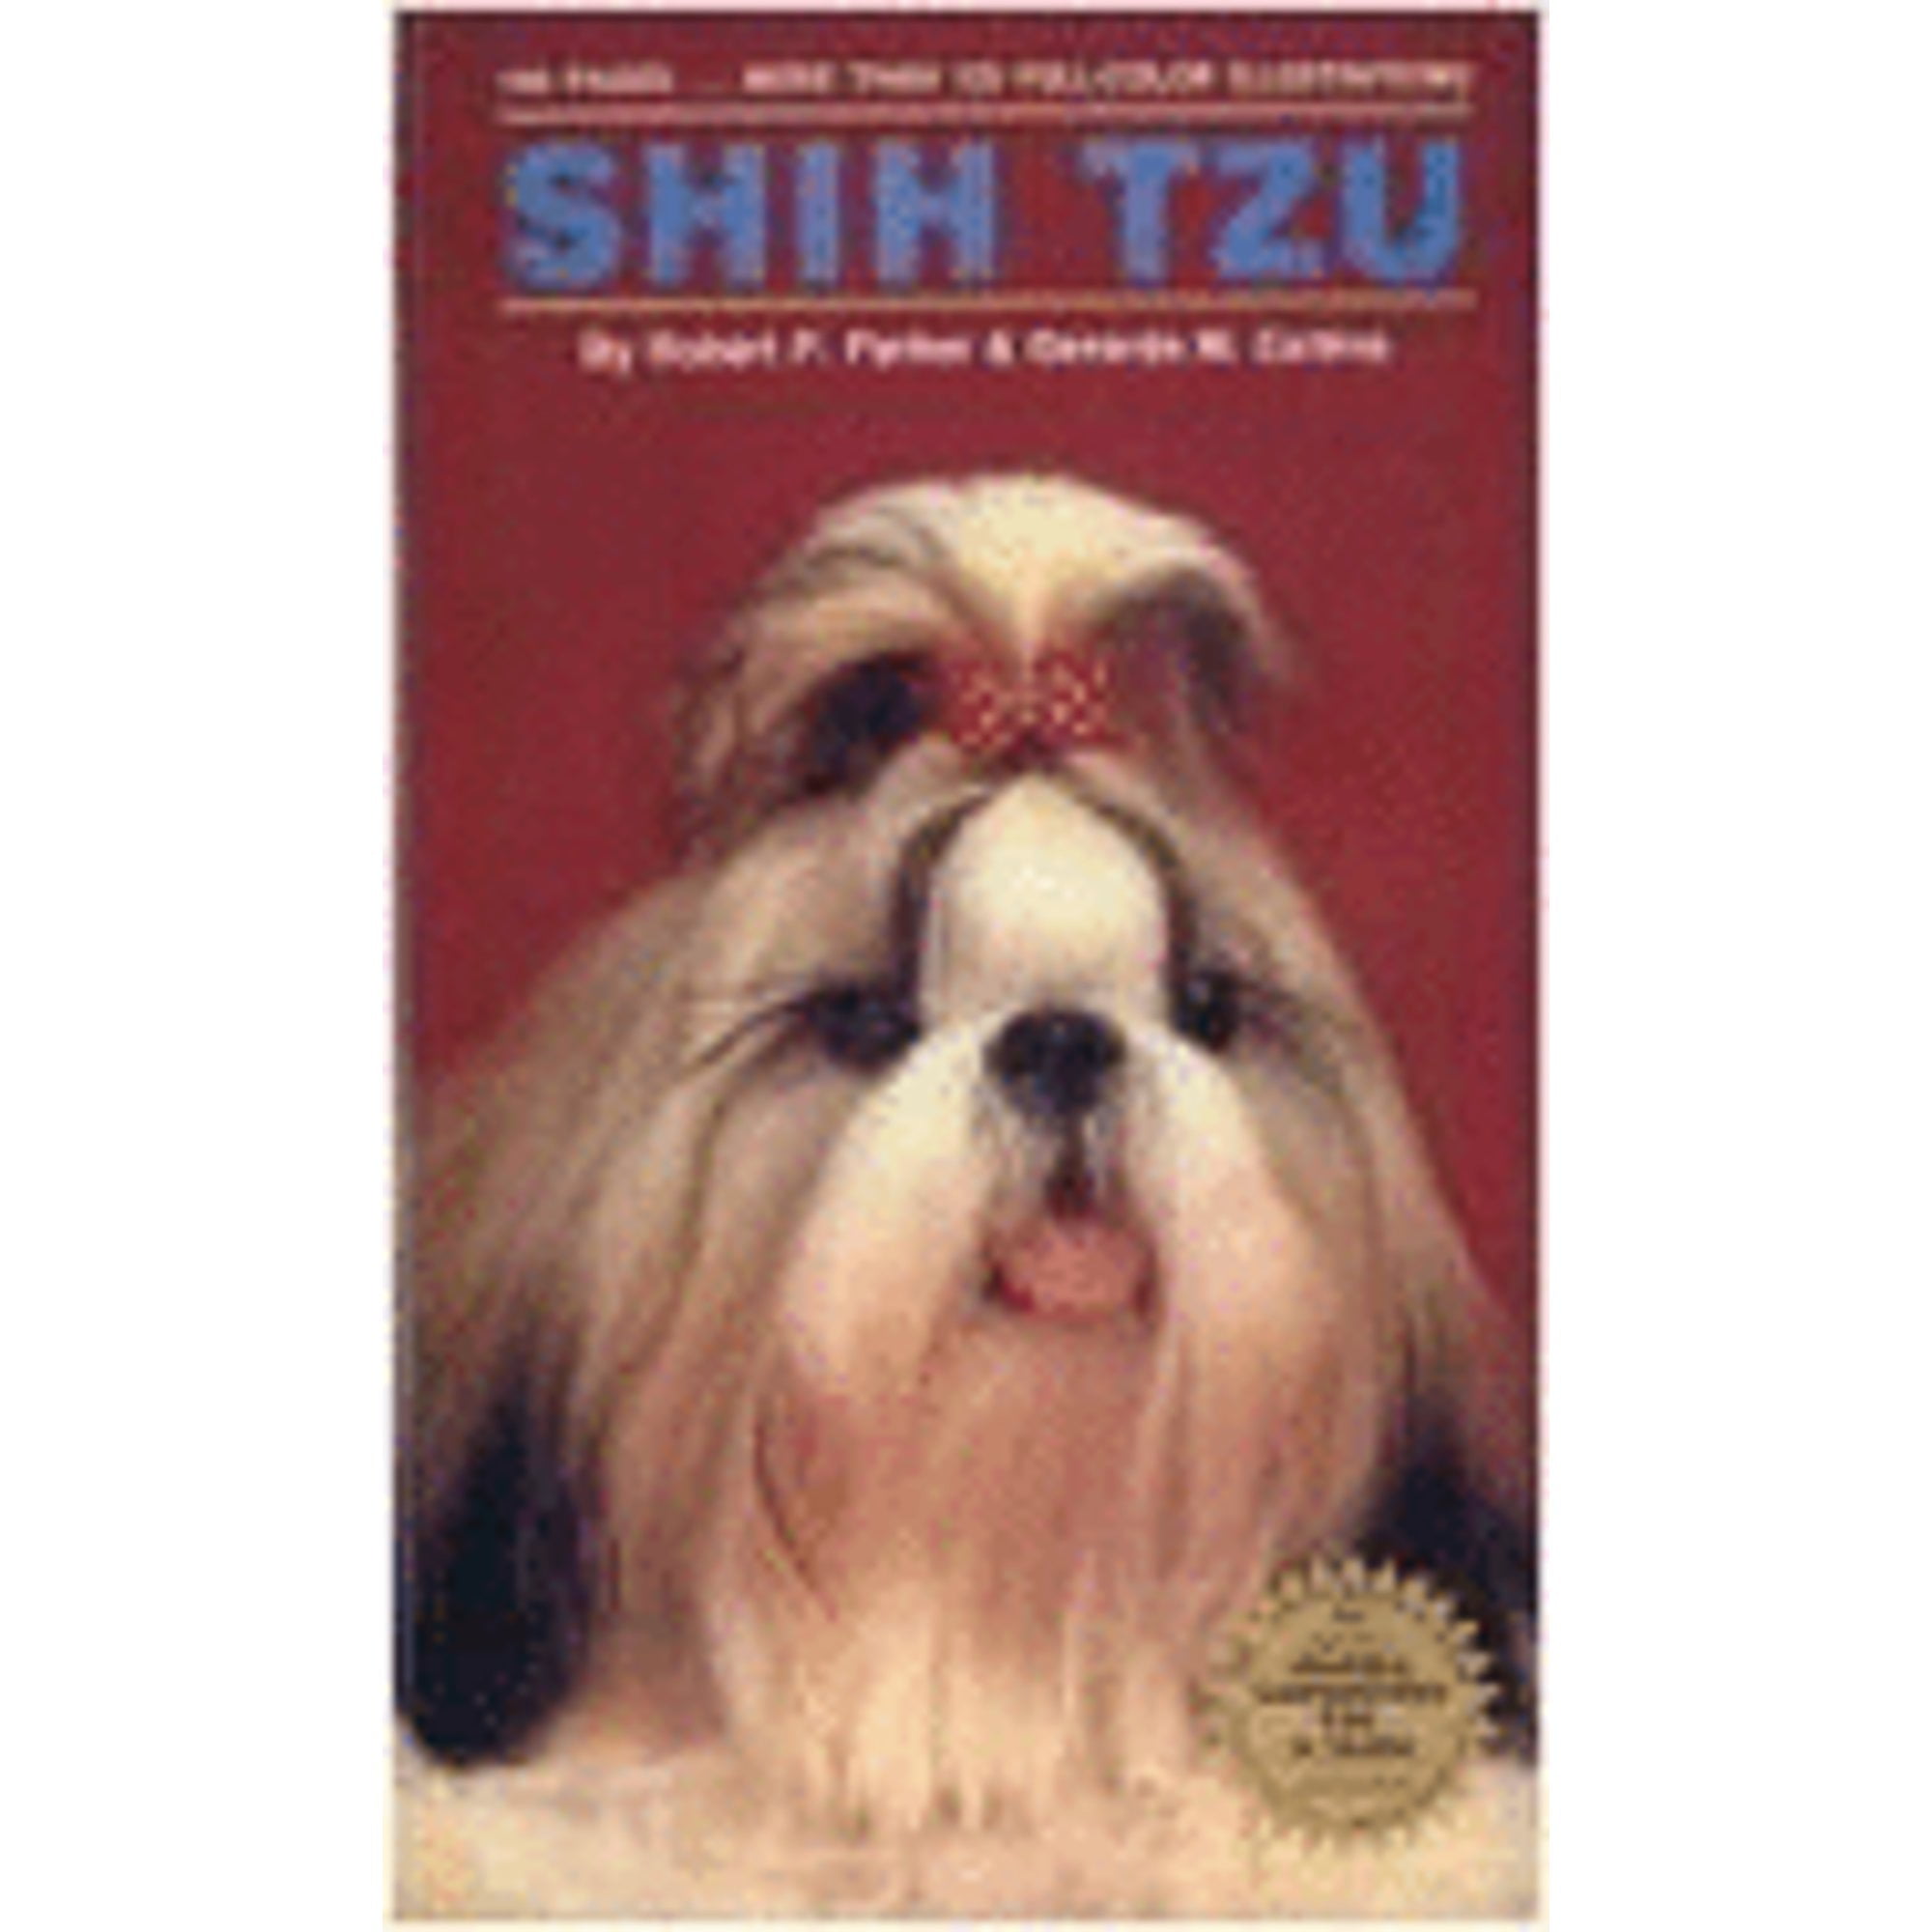 Pre-Owned Shih Tzu(oop) (Hardcover 9780866227964) by Robert P Parker, Gerarda M Collins